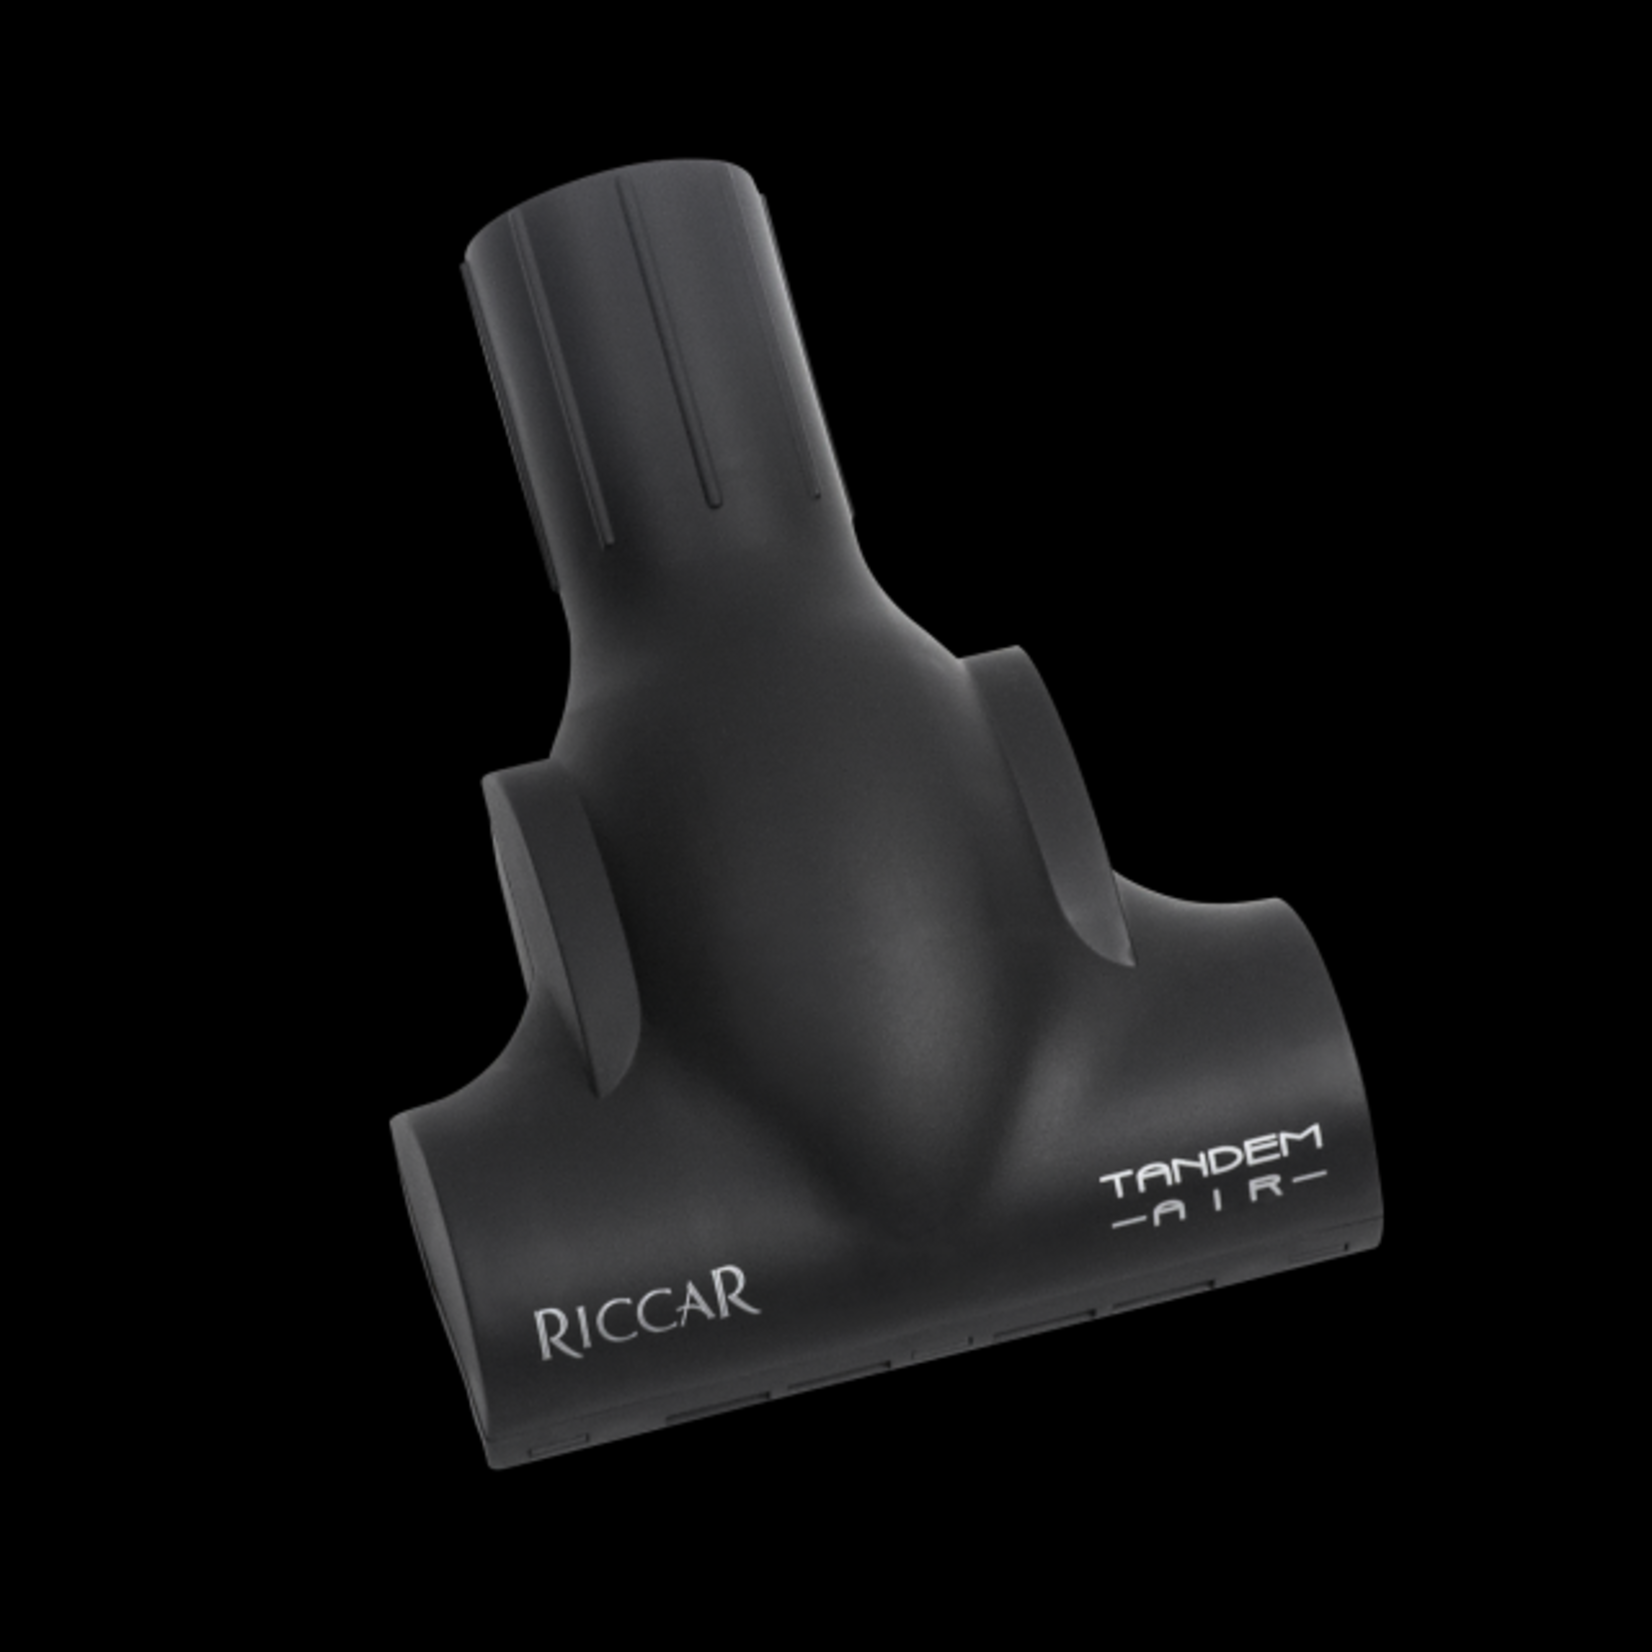 Riccar Riccar Handheld Turbo Brush for Clean Air Vacuums - Universal Neck